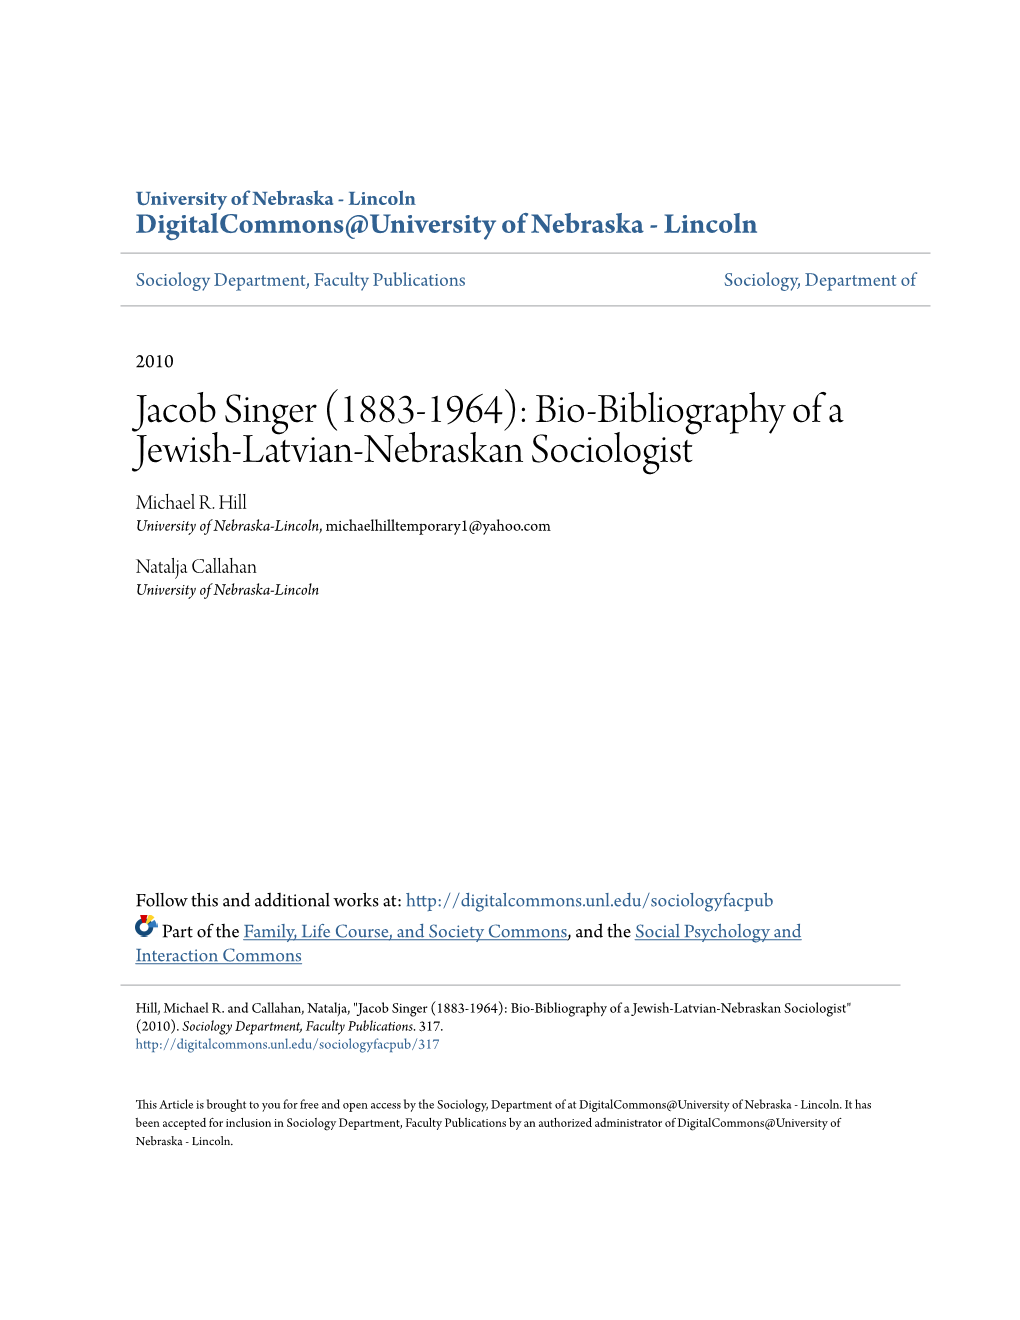 Jacob Singer (1883-1964): Bio-Bibliography of a Jewish-Latvian-Nebraskan Sociologist Michael R